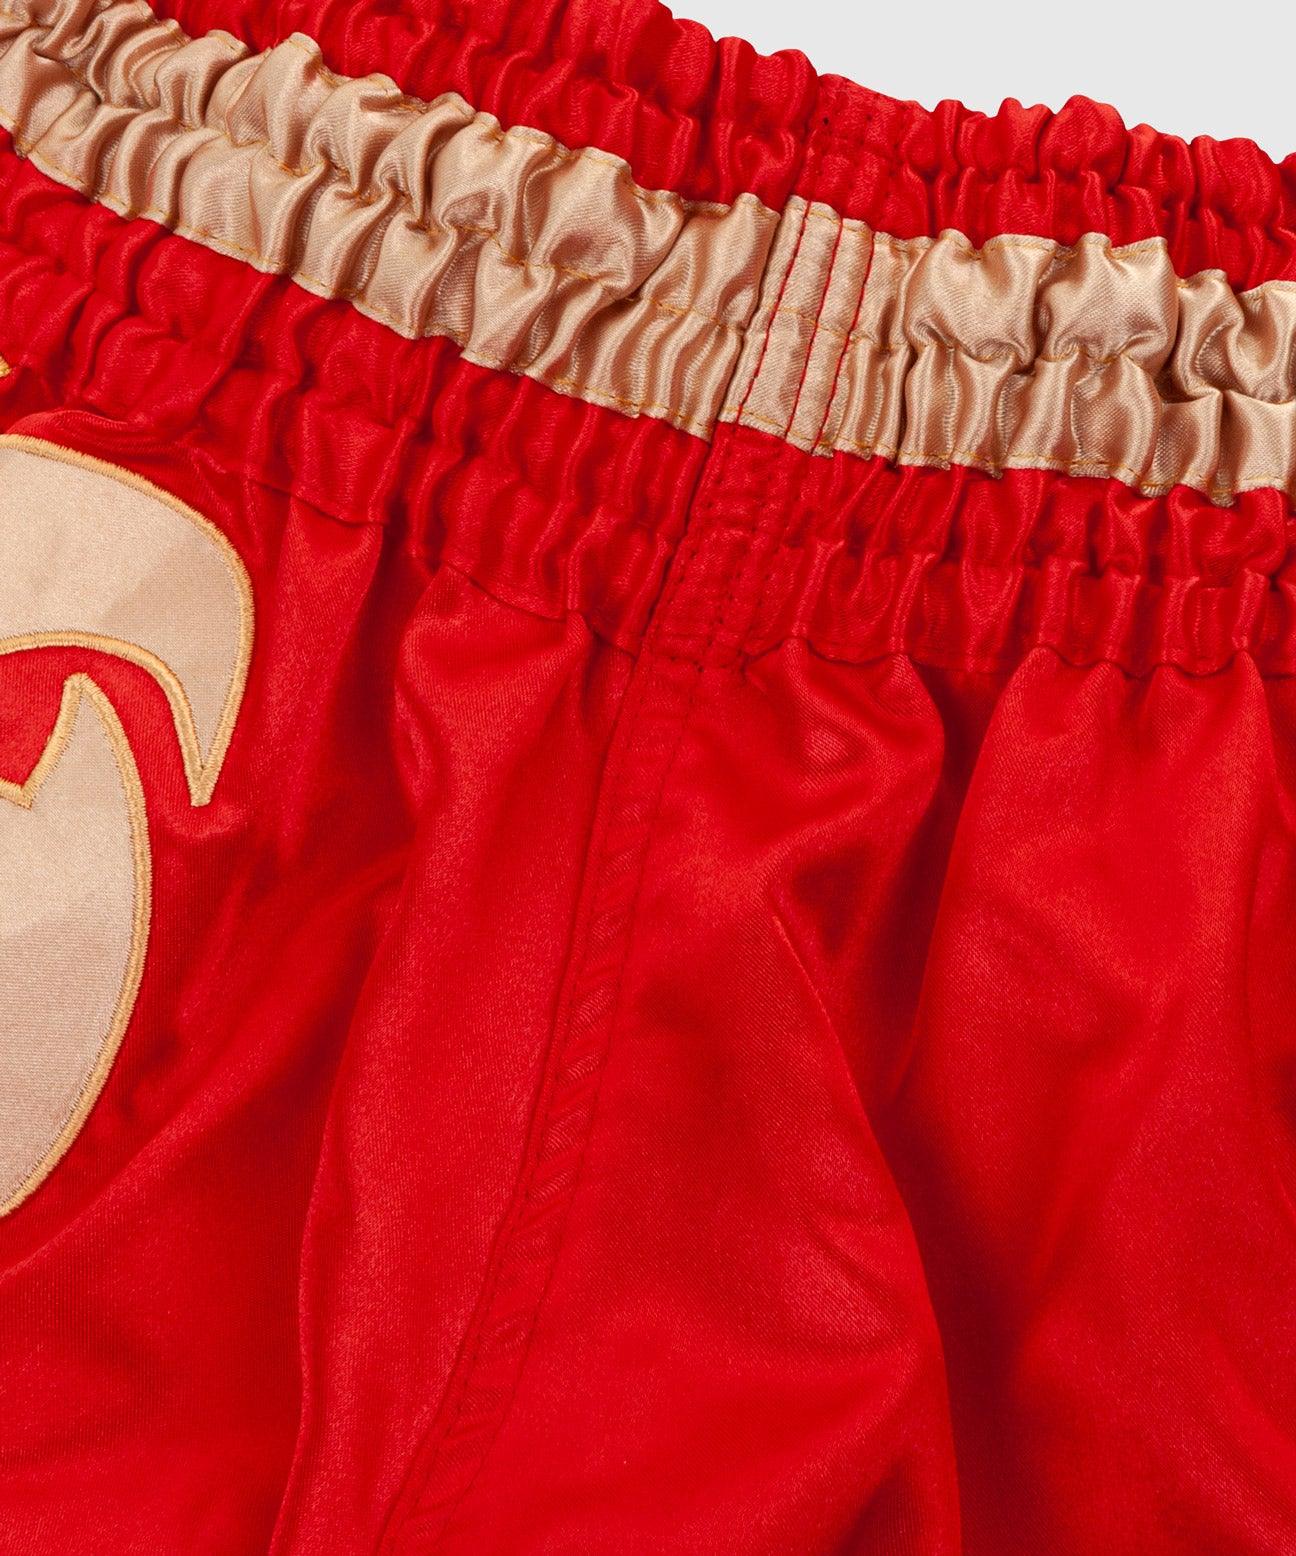 Venum Giant Muay Thai Shorts - Red/Gold